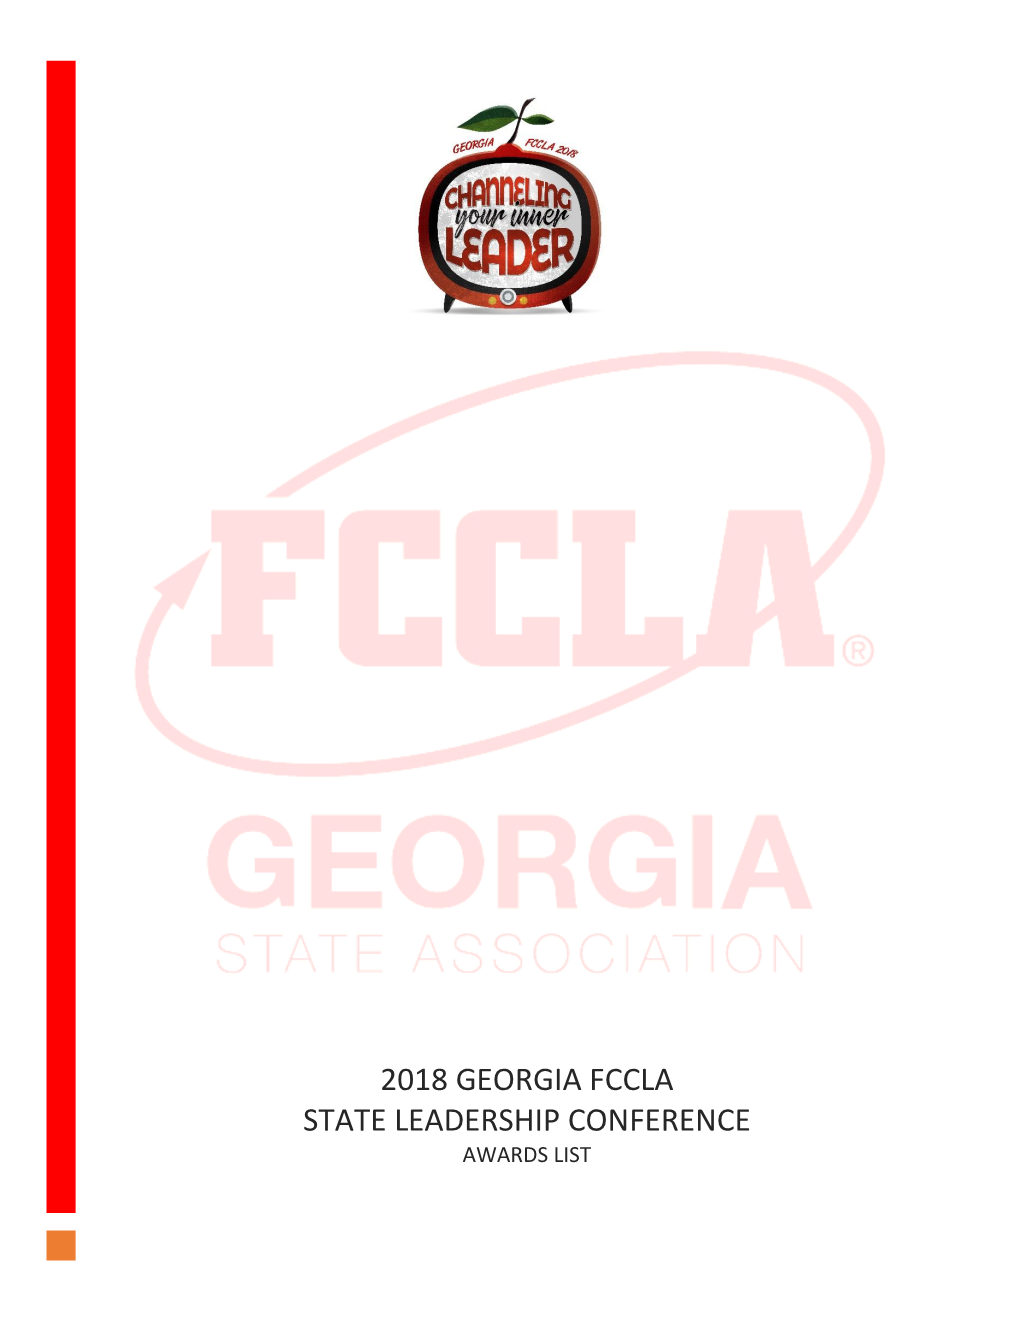 2018 Georgia Fccla State Leadership Conference Awards List